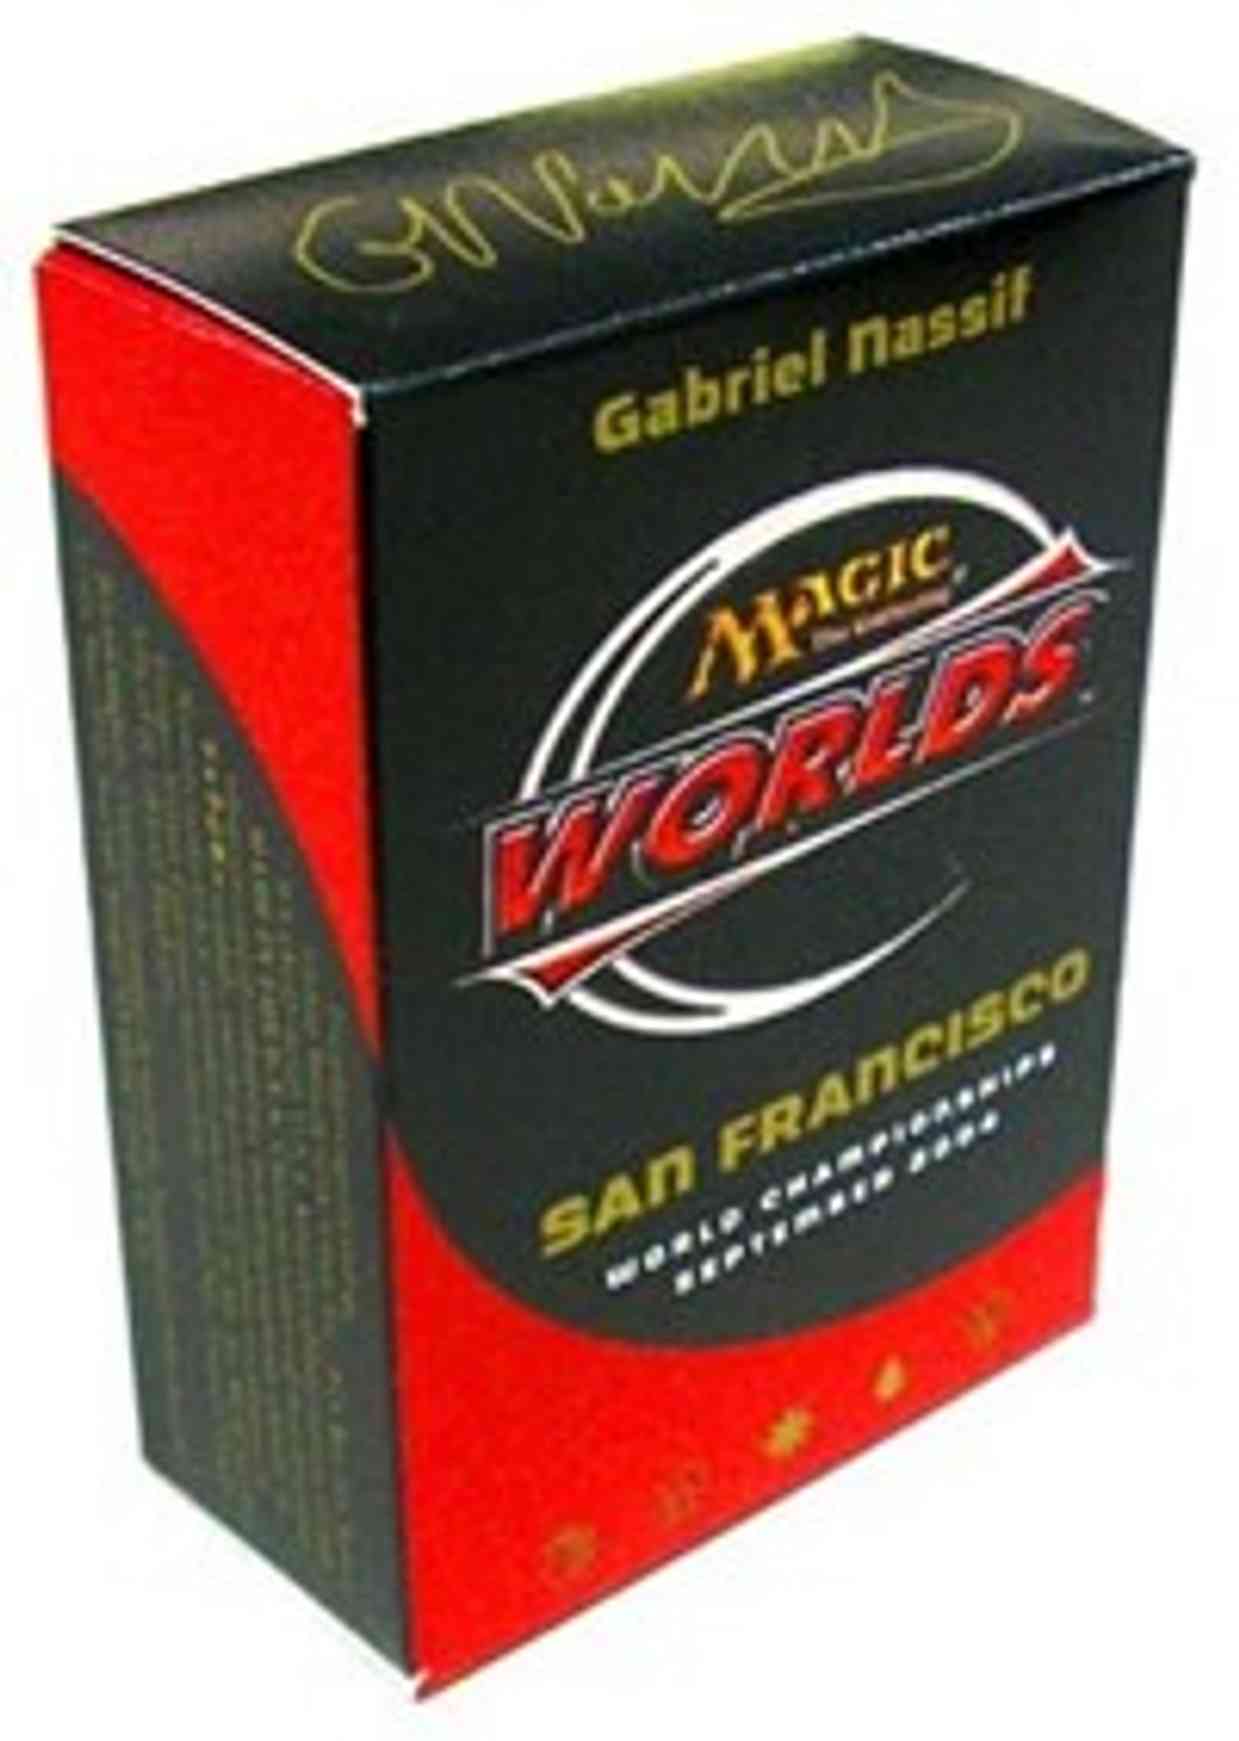 World Championship Deck: 2004 San Francisco - Gabriel Nassif, Quarterfinalist magic card front